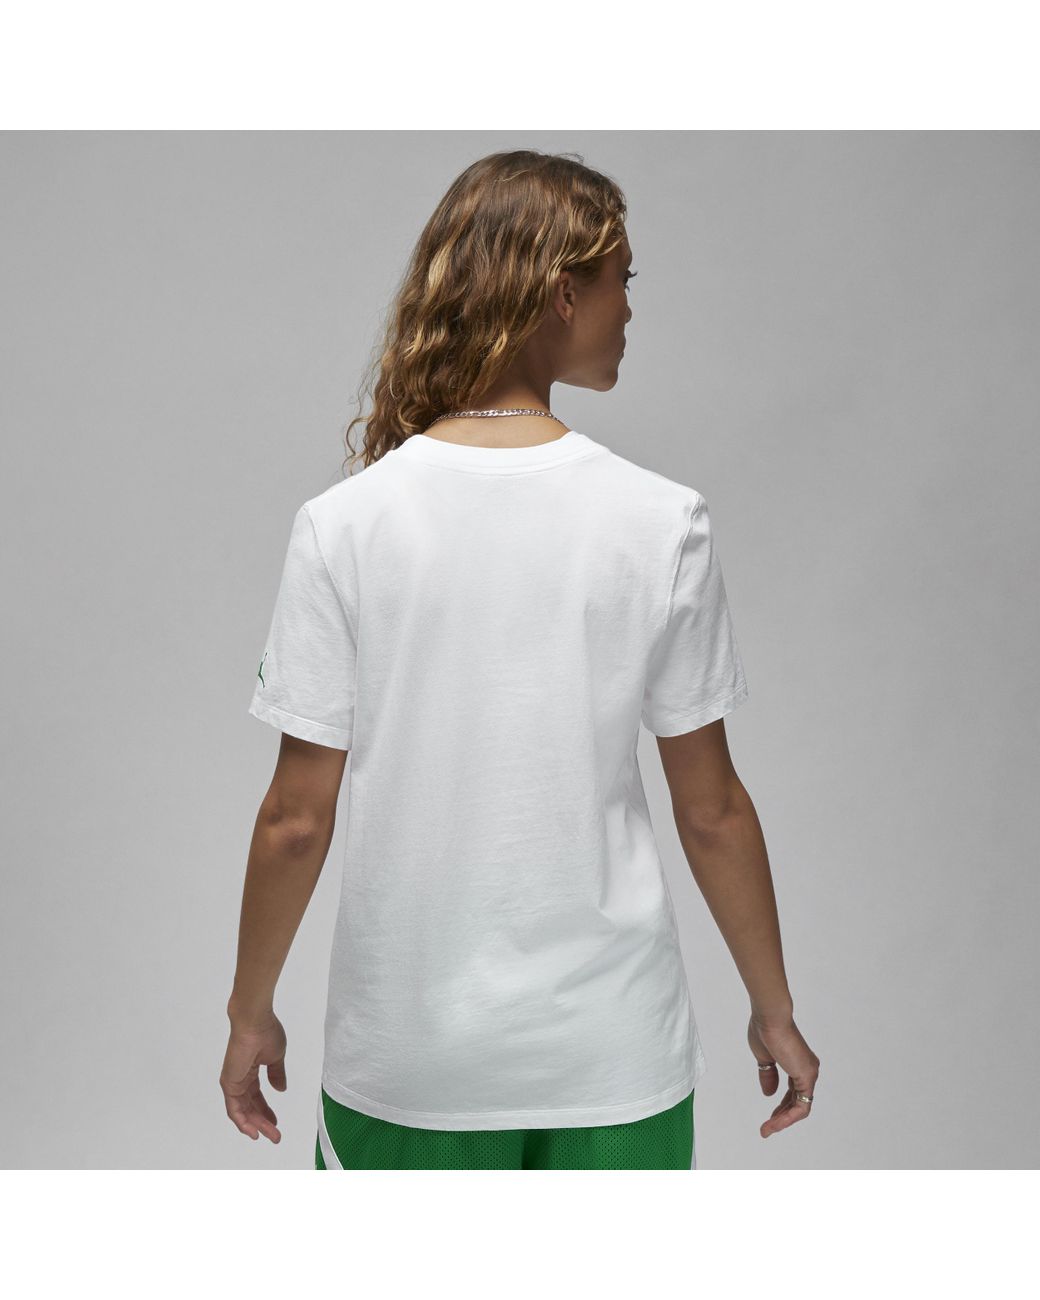 adidas Originals Graphics Trefoil backprint leaves T-shirt in non